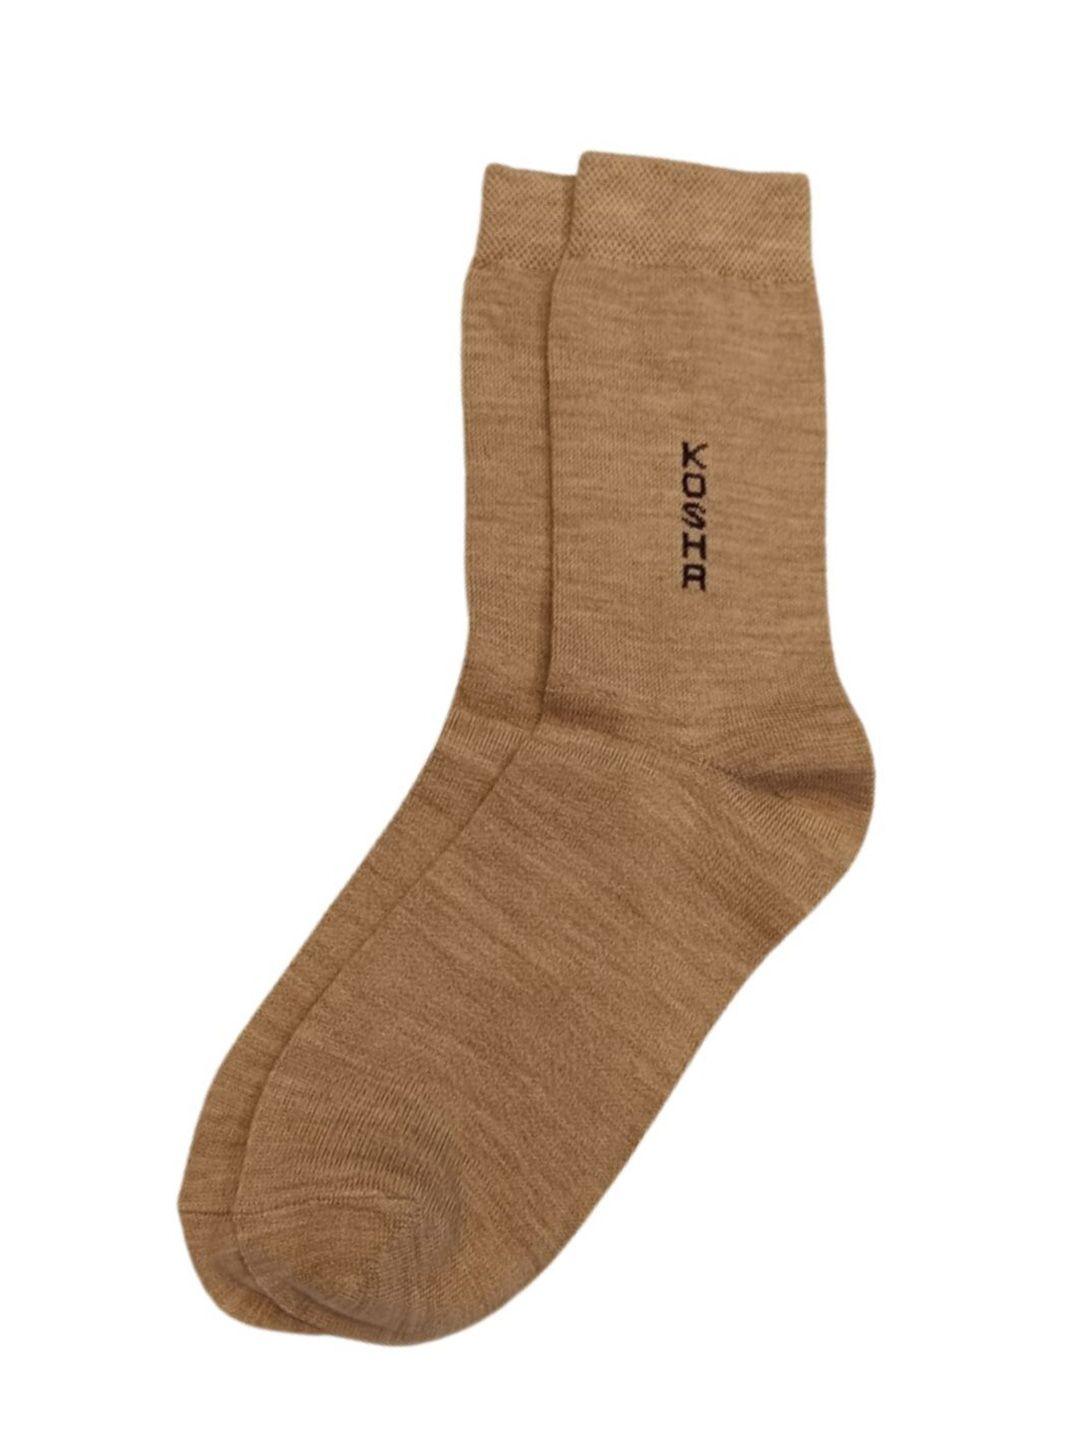 kosha men merino wool fine regular socks